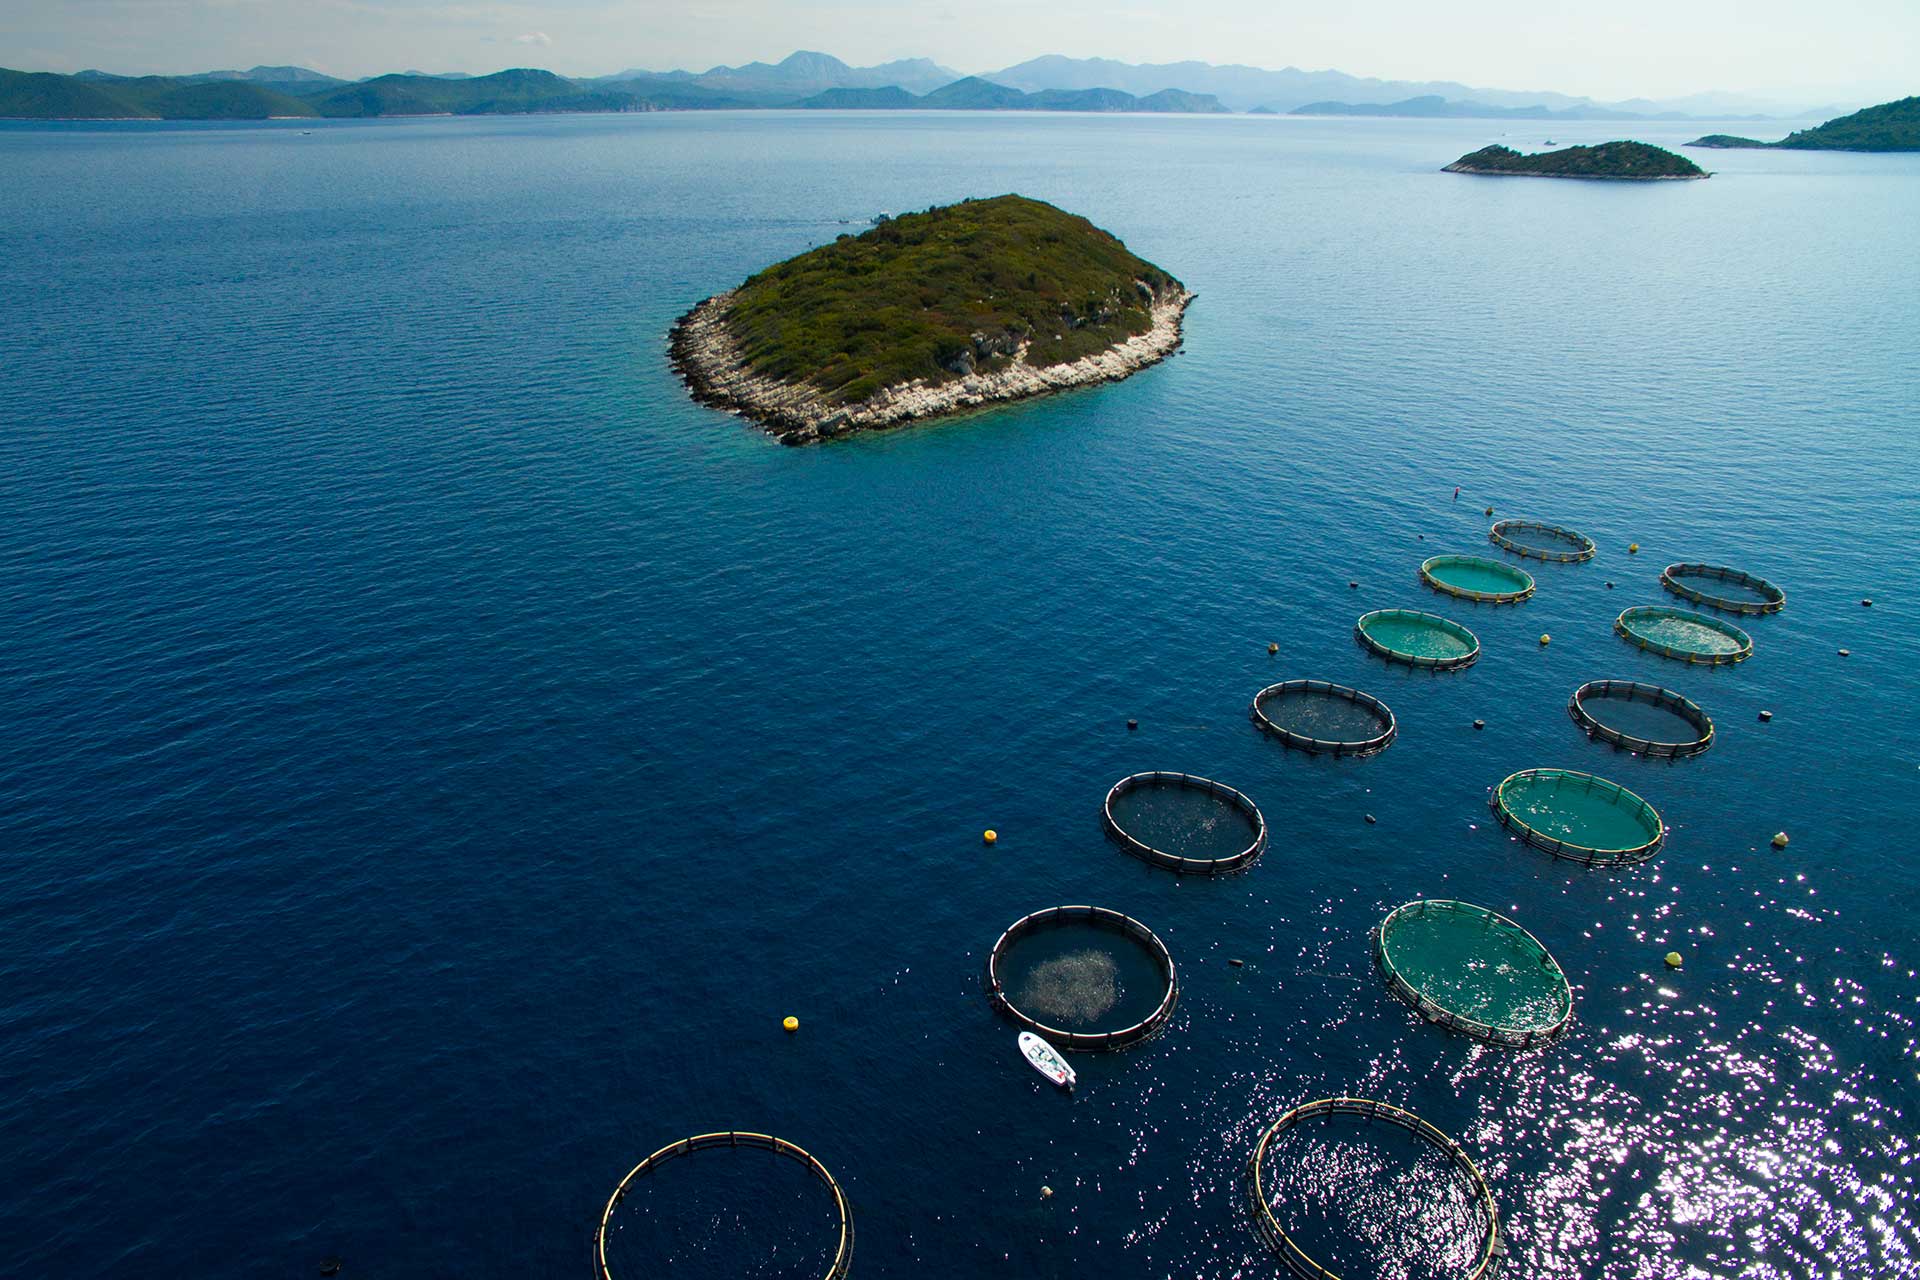 Riba Mljet Fisheries - nets floating on the open sea